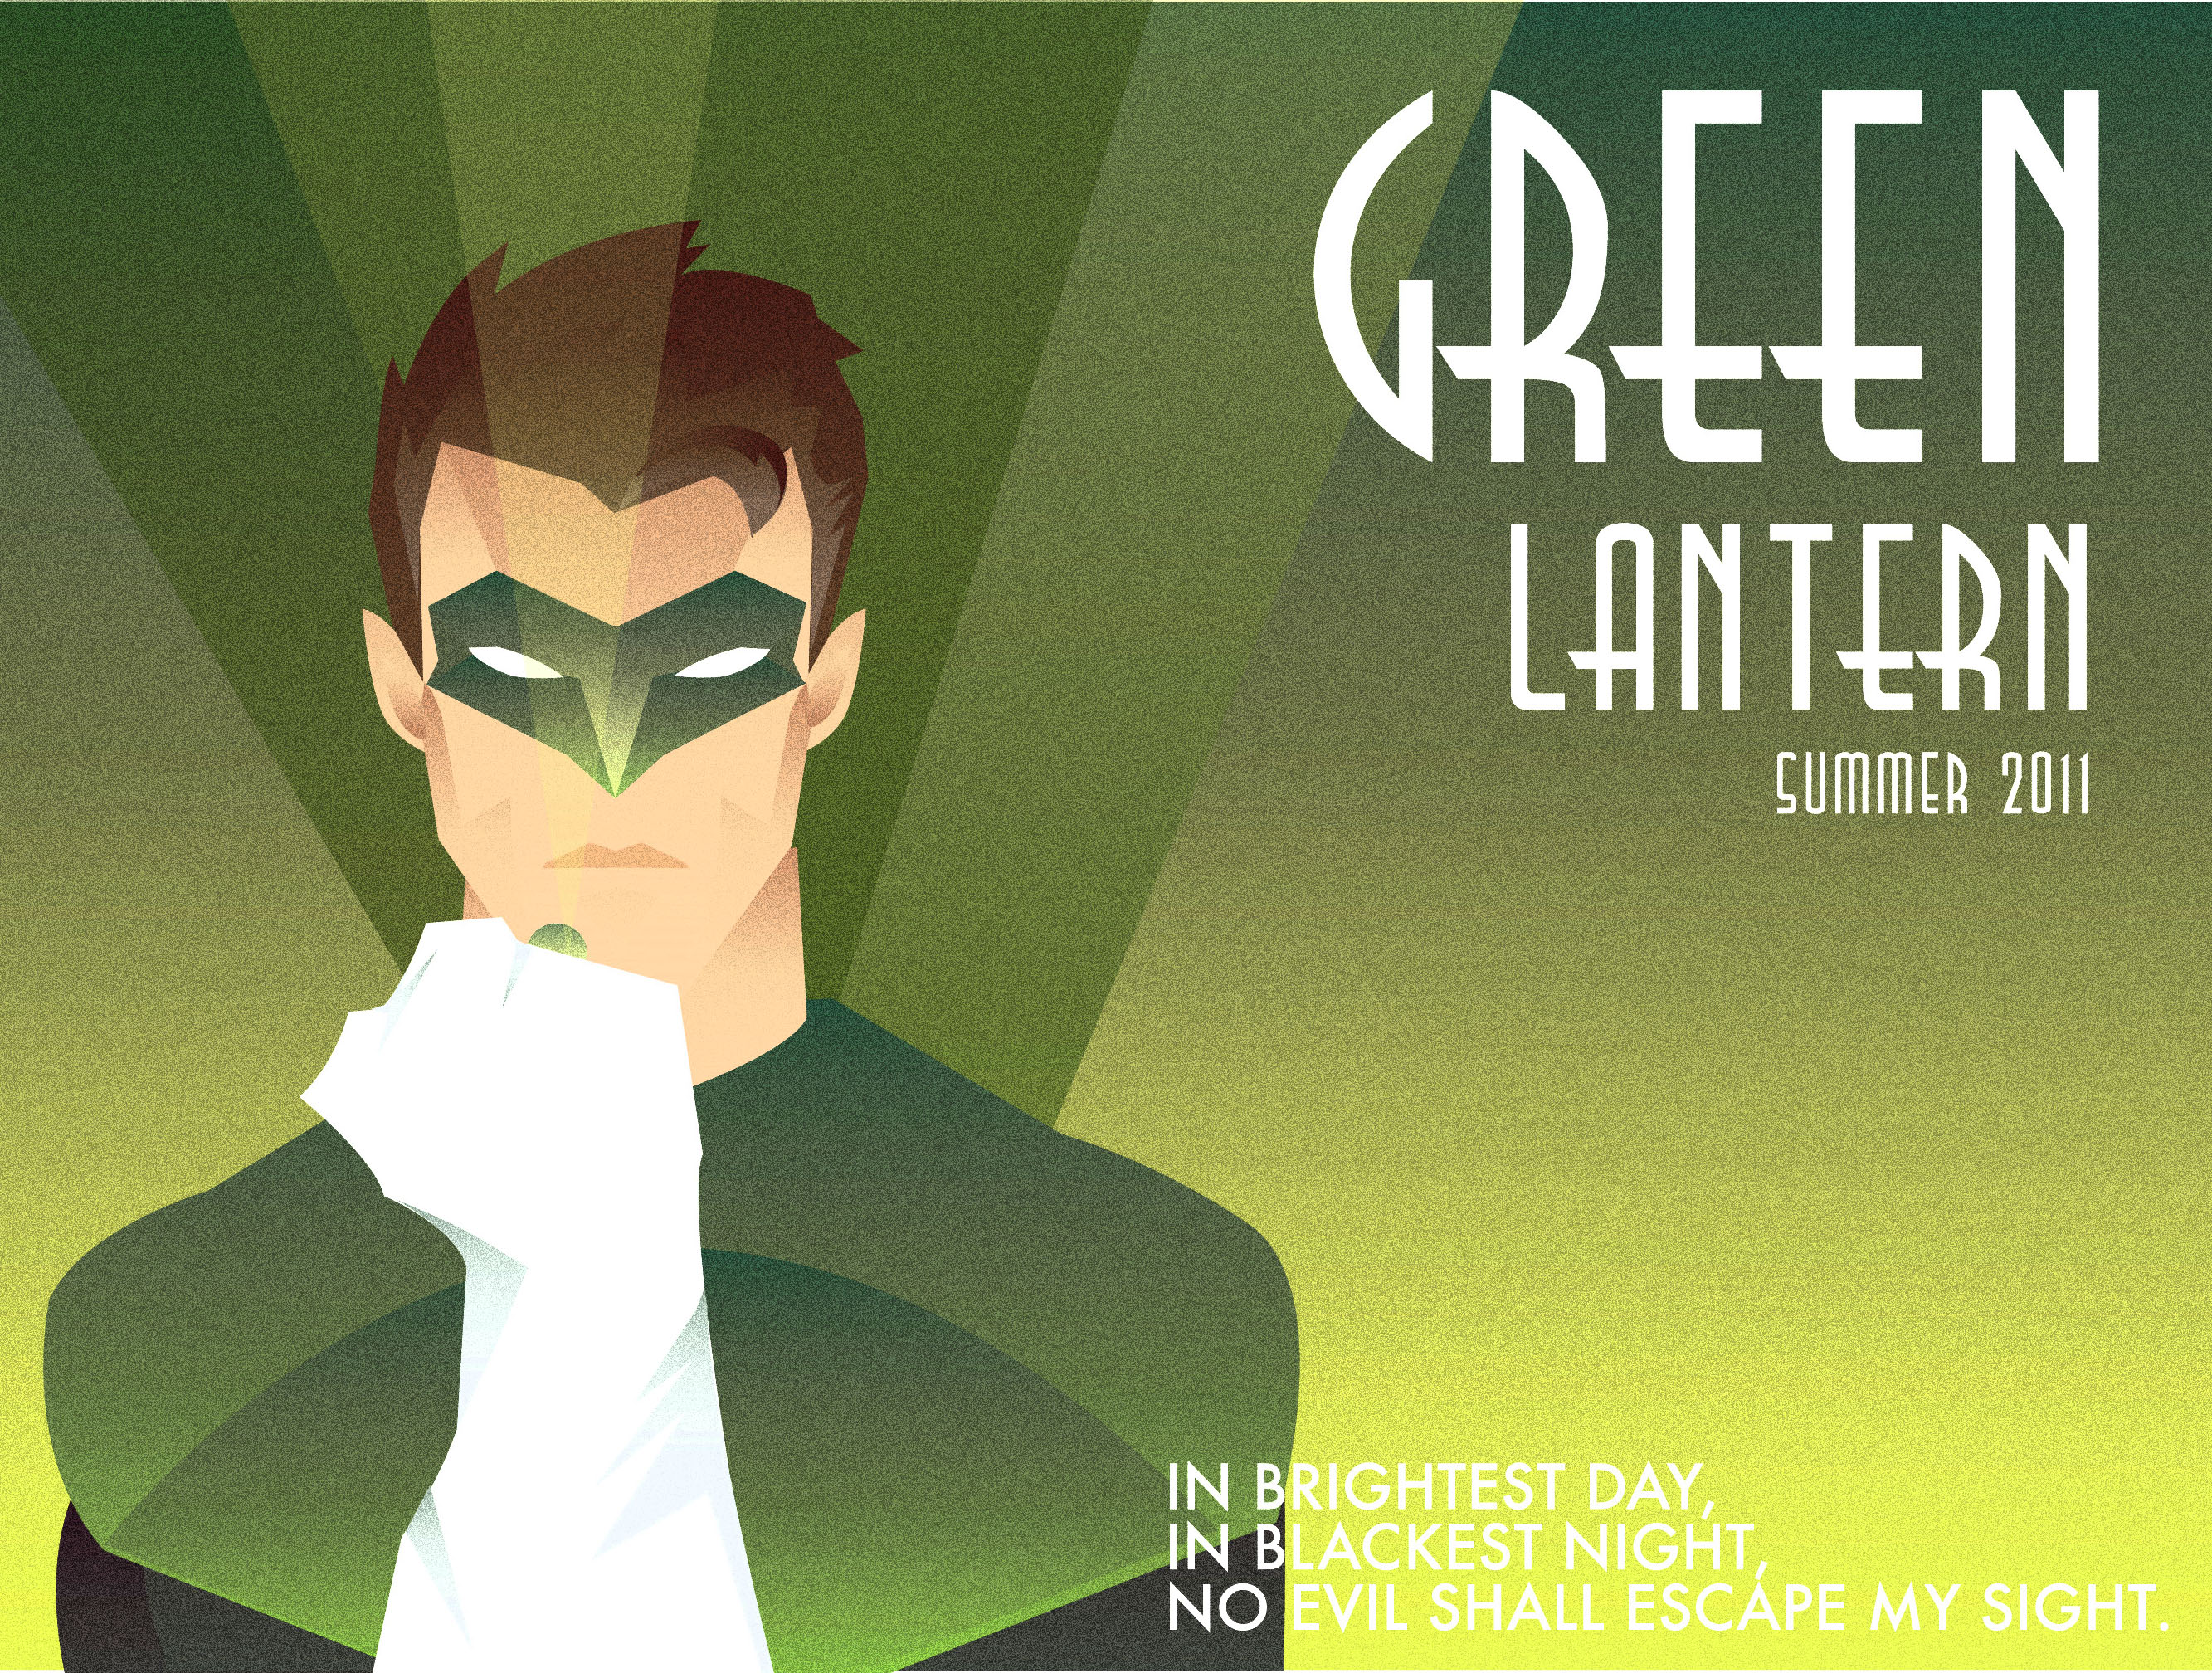 Green Lantern, DC Comics, superheroes - desktop wallpaper